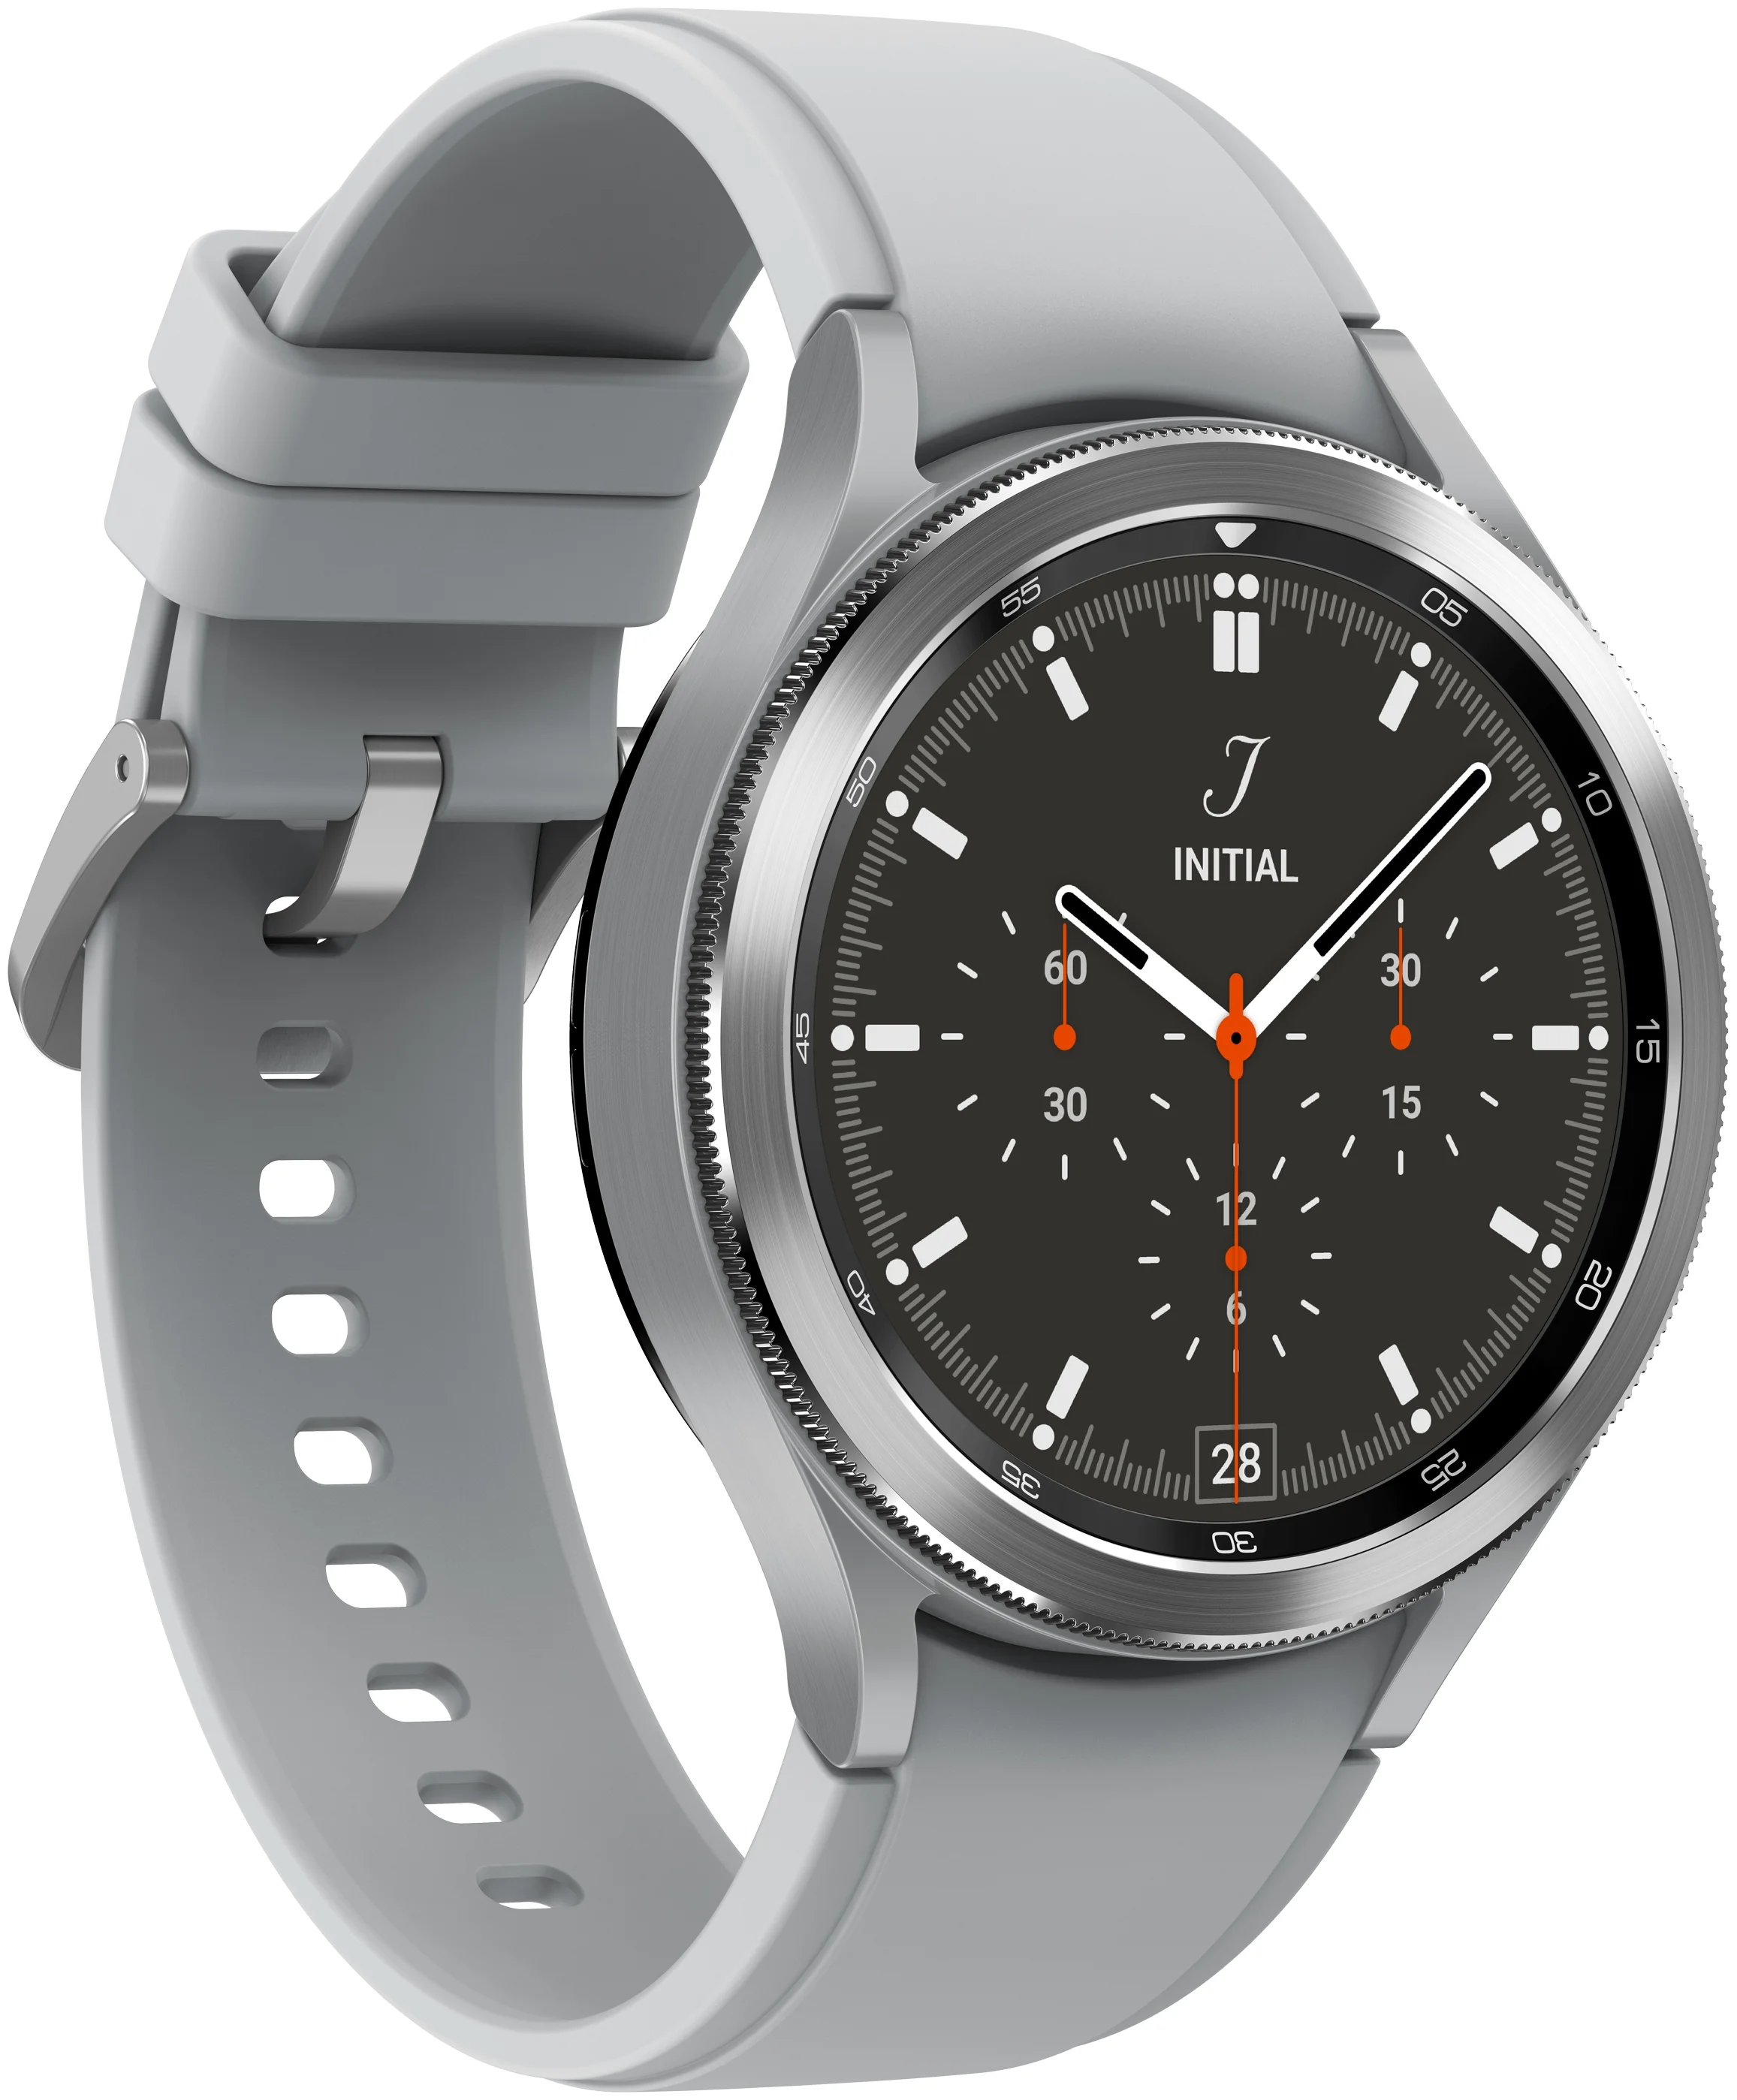 Samsung Galaxy Watch4 Classic 46мм - датчики: акселерометр, гироскоп, пульсометр с постоянным измереним пульса, ЭКГ, тонометр